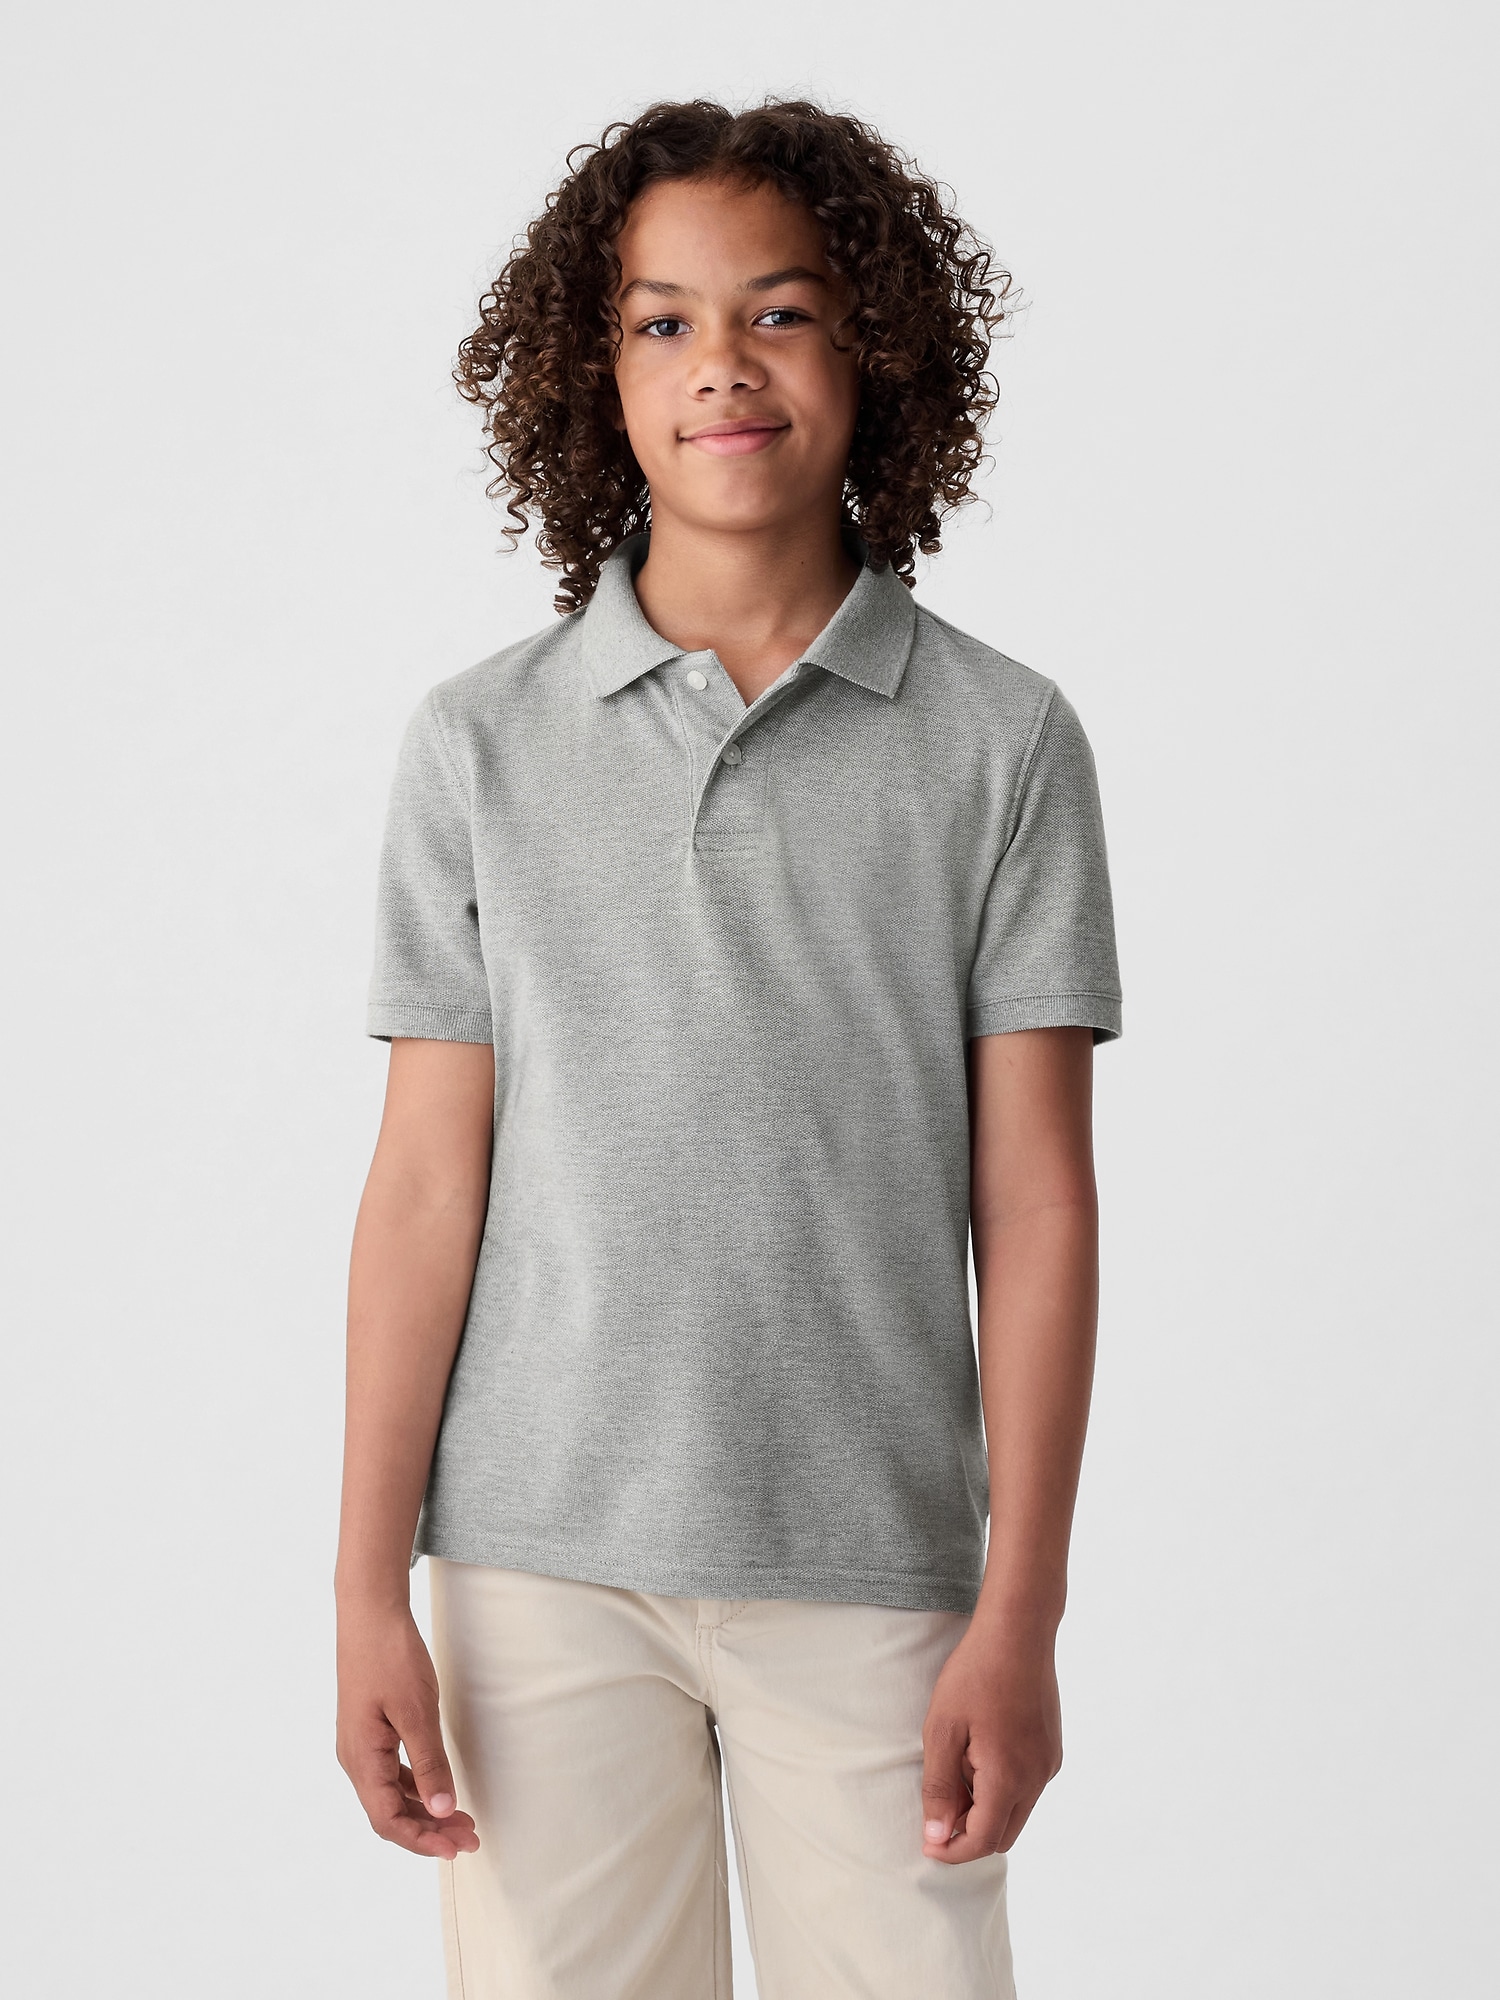 Kids Organic Cotton Uniform Polo Shirt